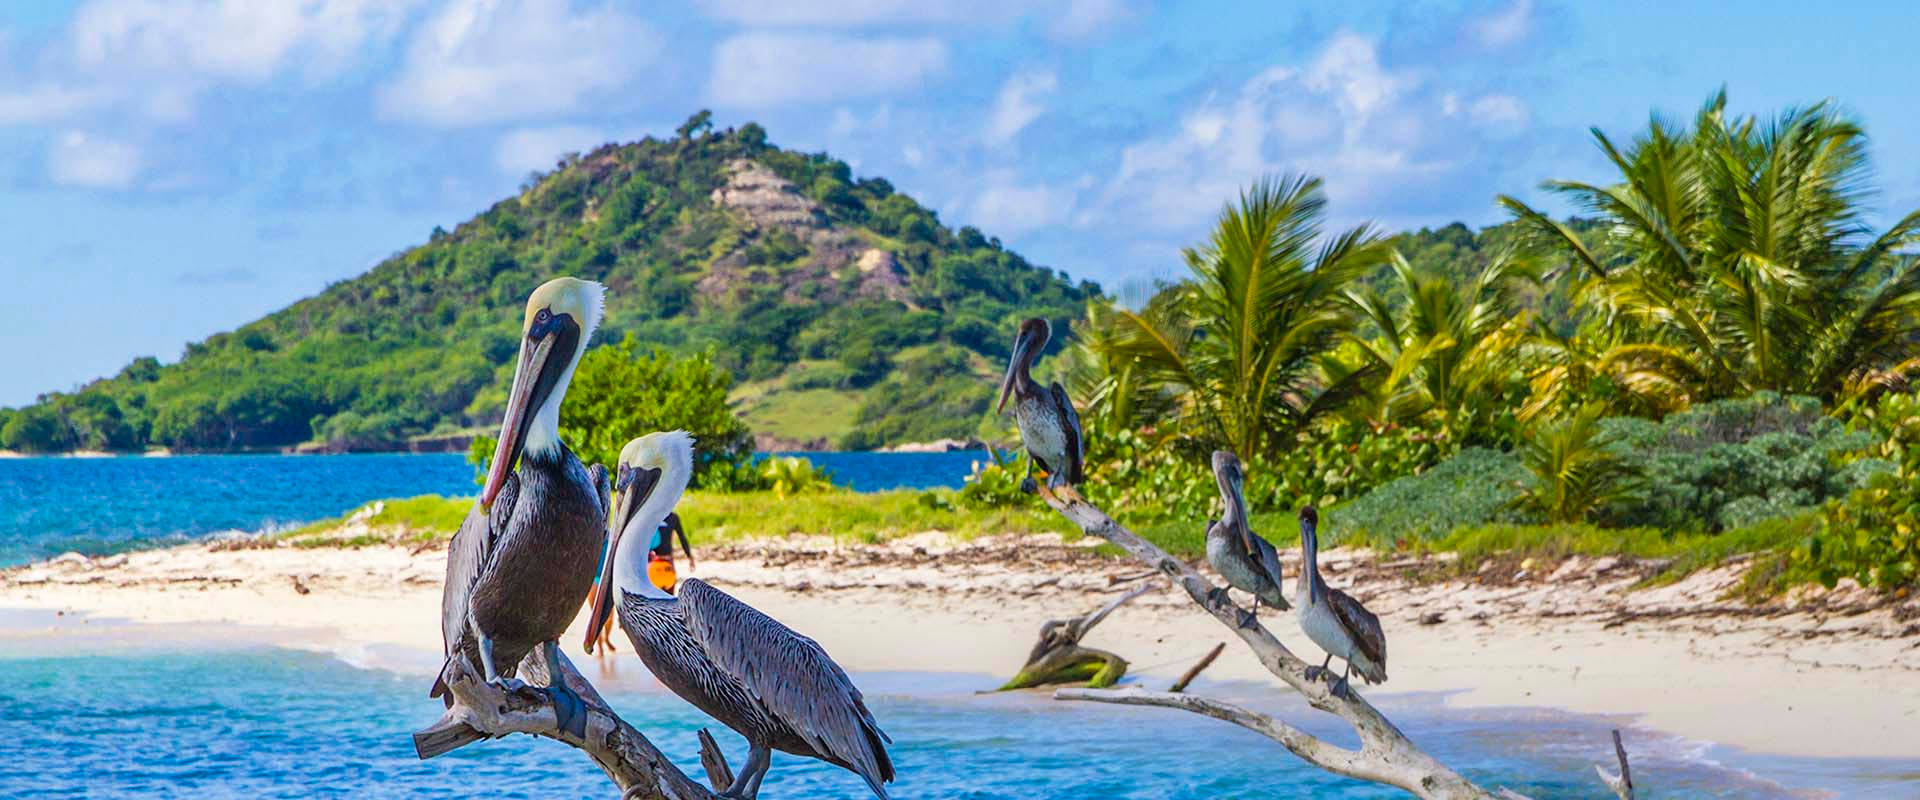 North America Grenada Pelican